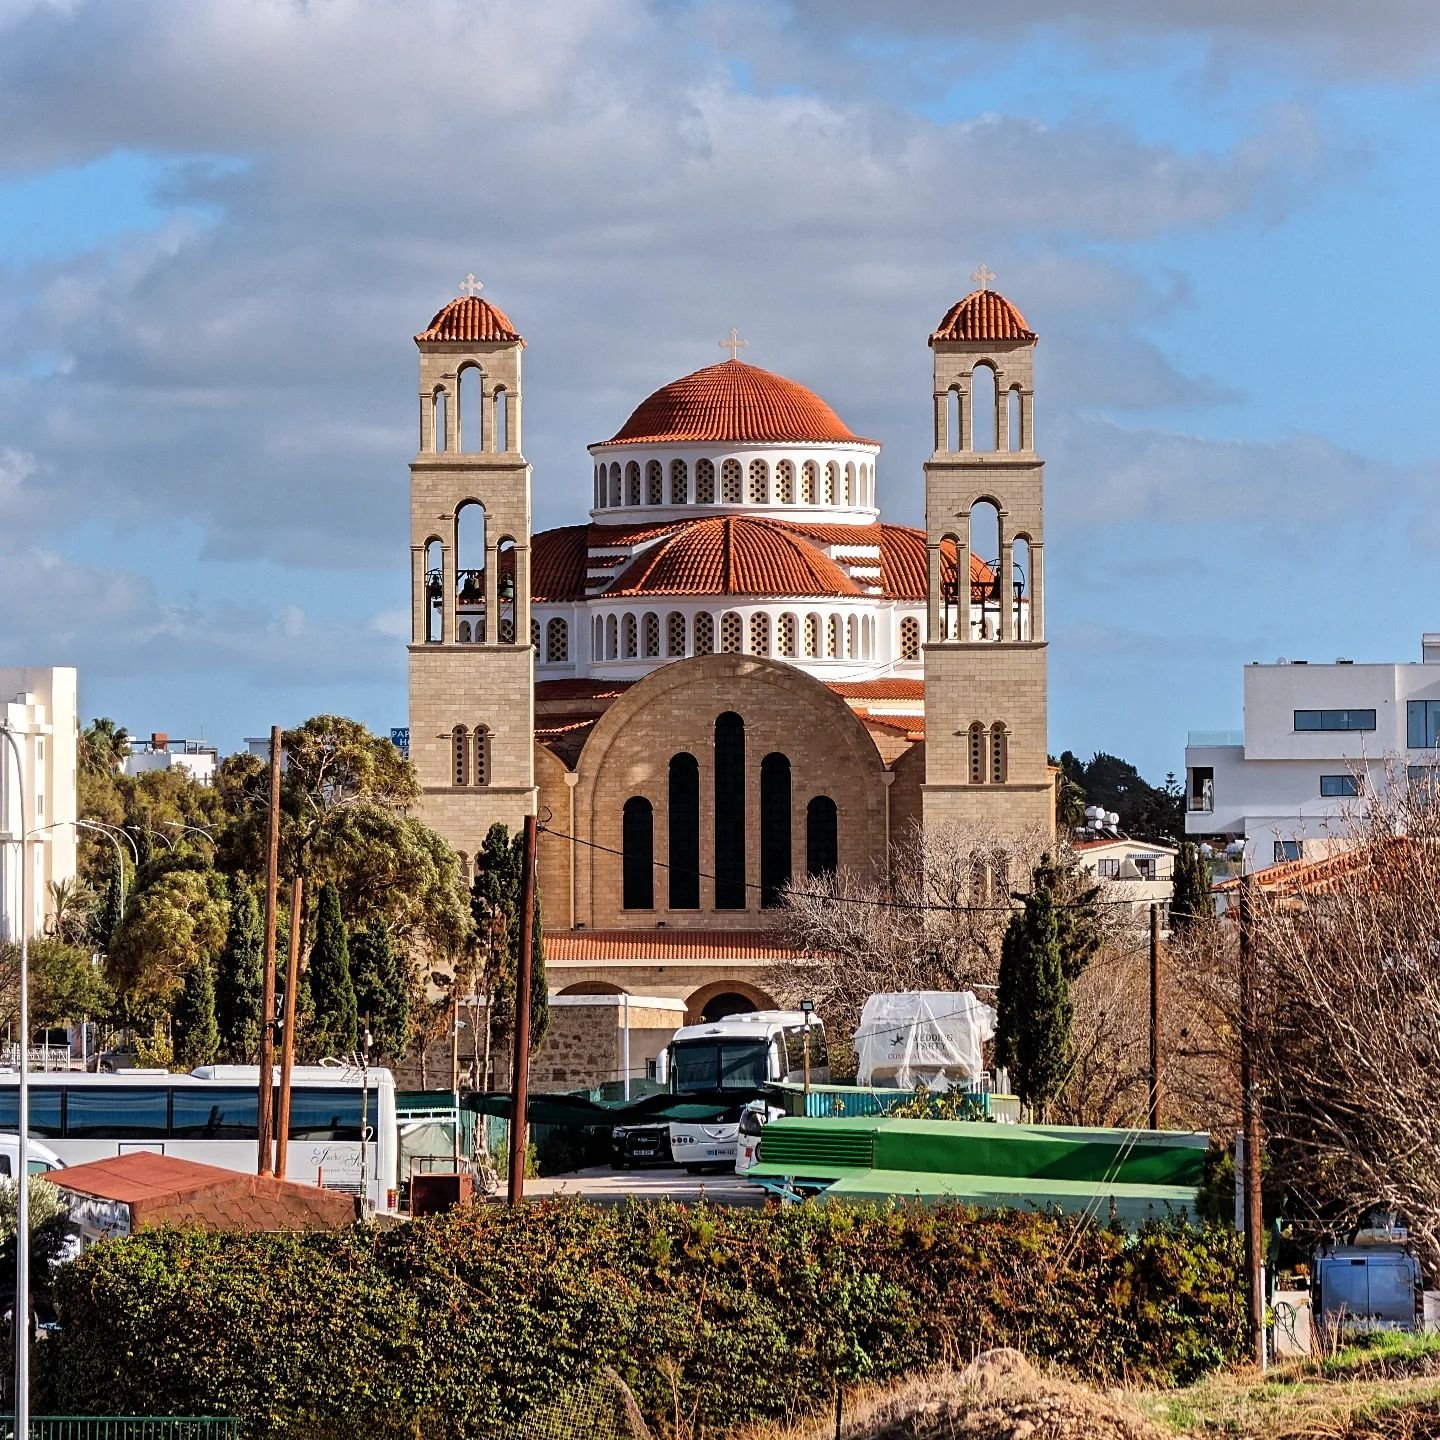 Church of Agion Anargyron, 📍 Paphos, Cyprus

#photooftheday #travel #photography #cyprus #greek #church